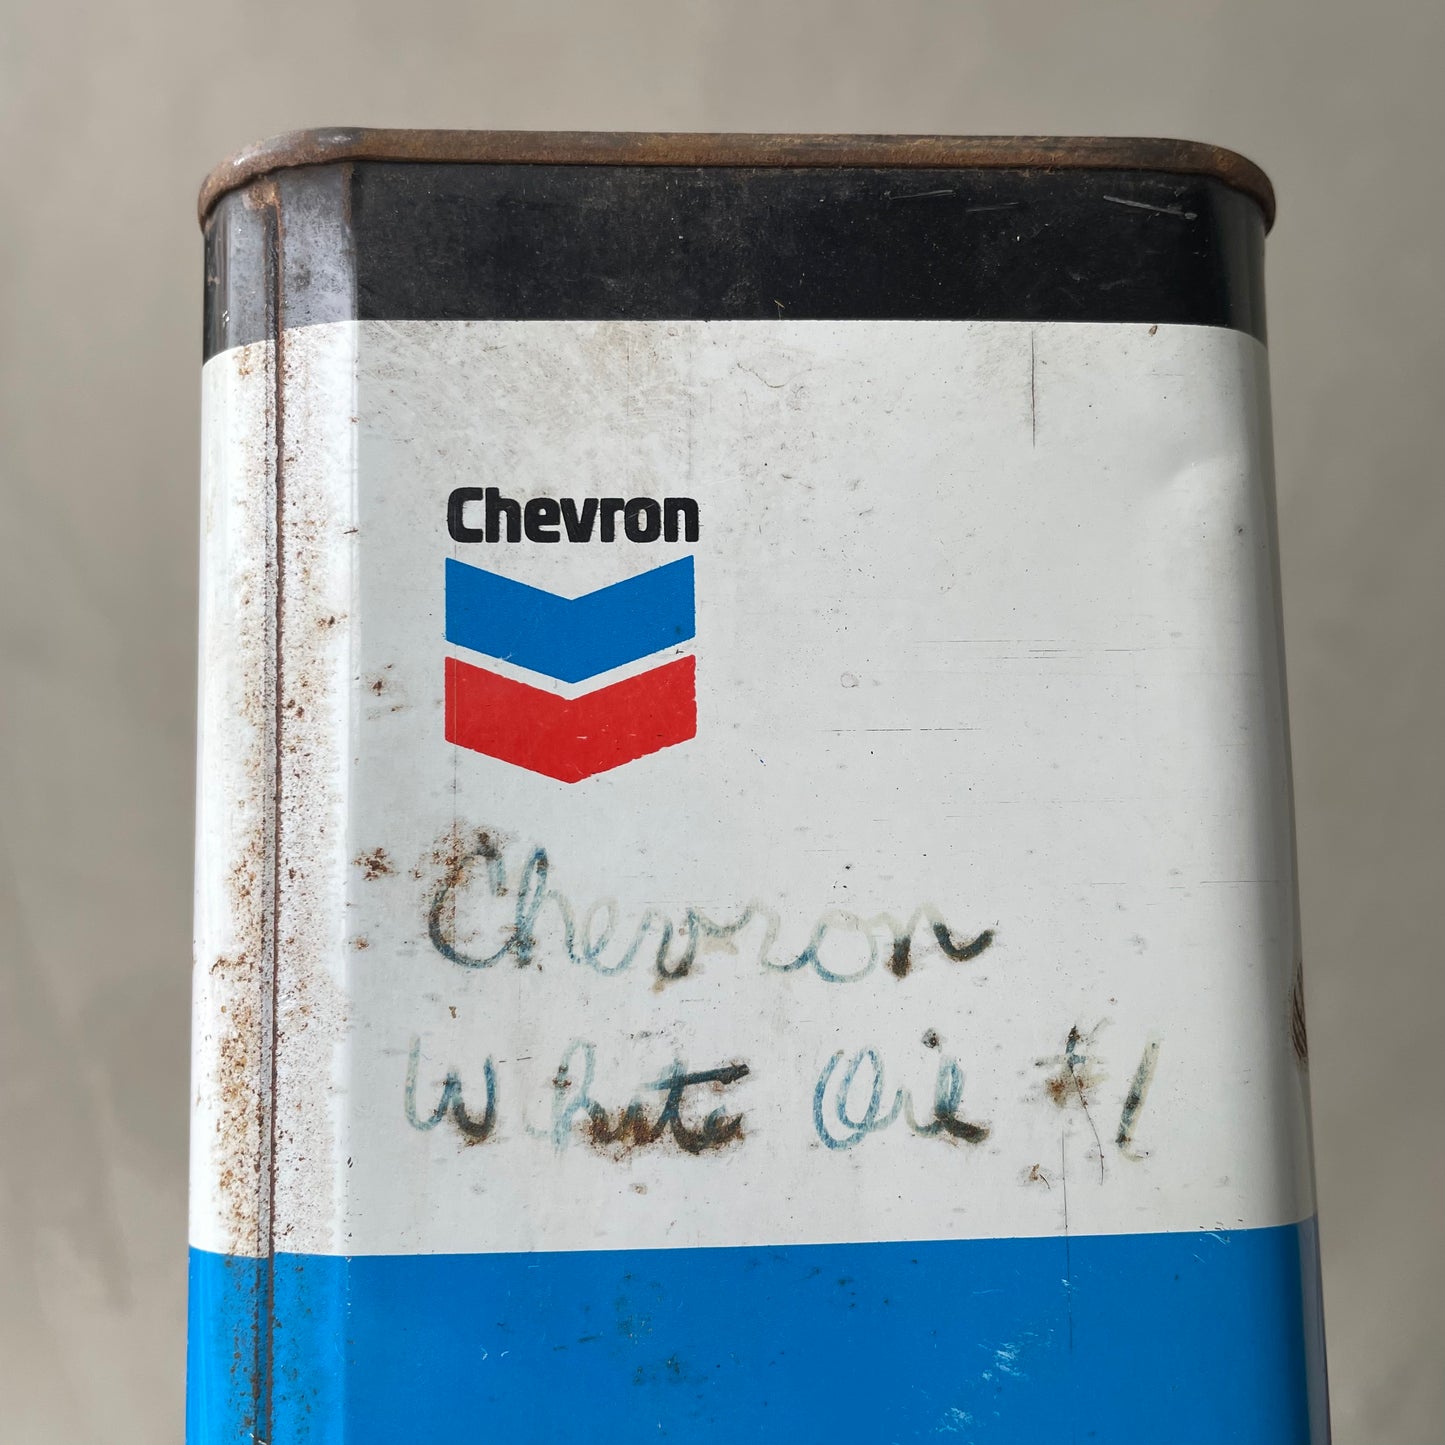 【USA vintage】Chevron １ gallon can オイル缶